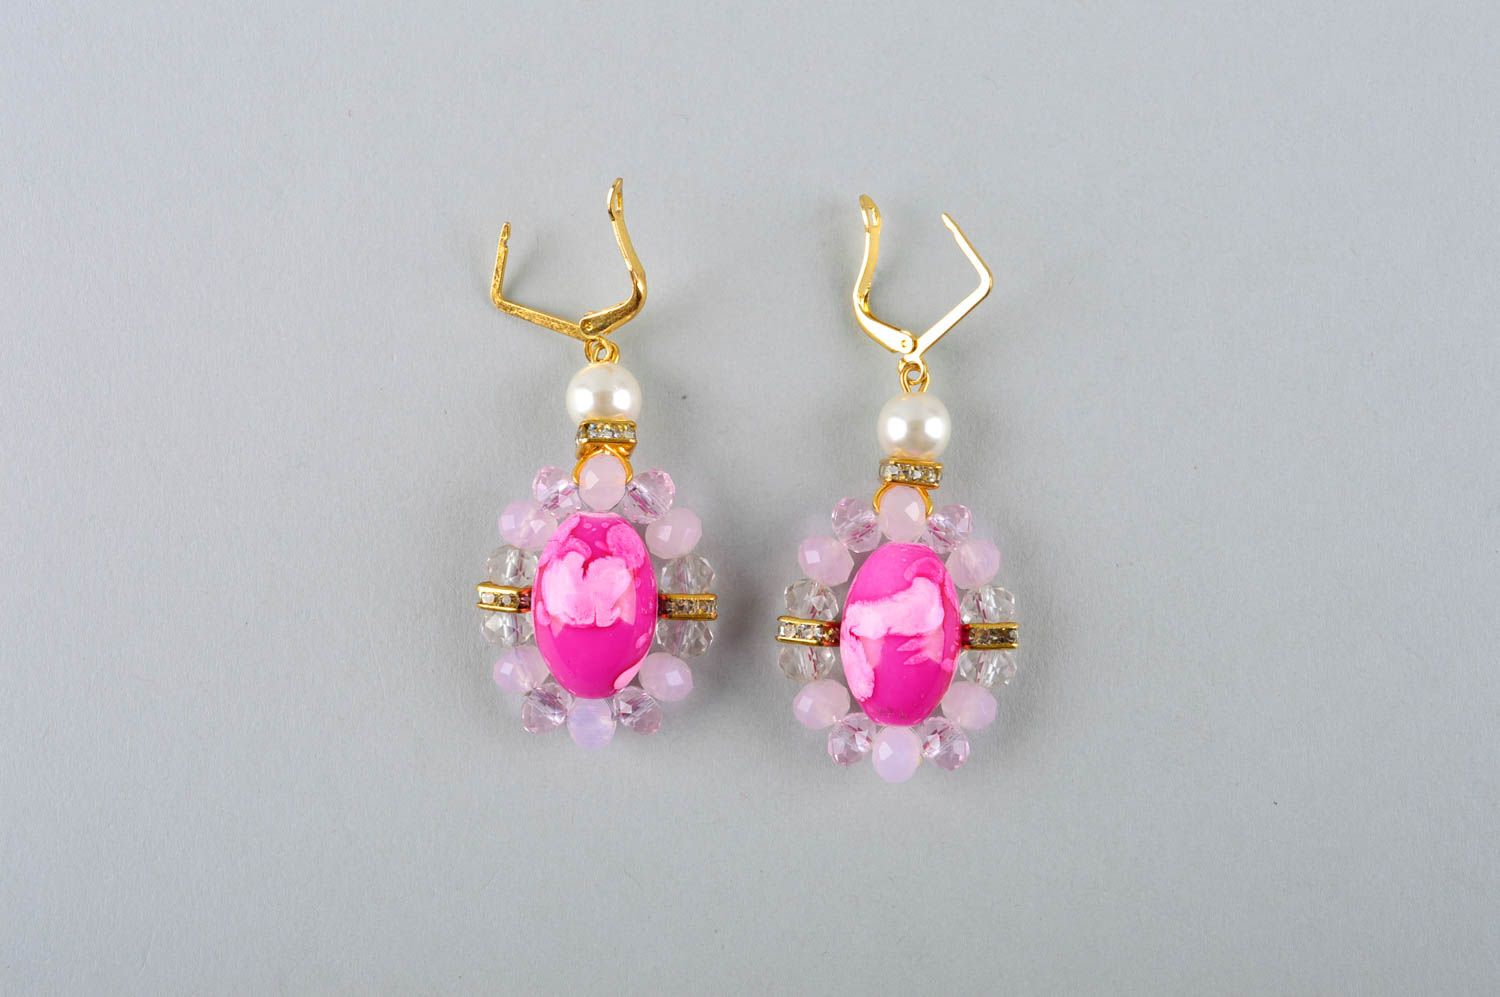 Homemade jewelry earrings for ladies cute earrings designer accessories photo 5